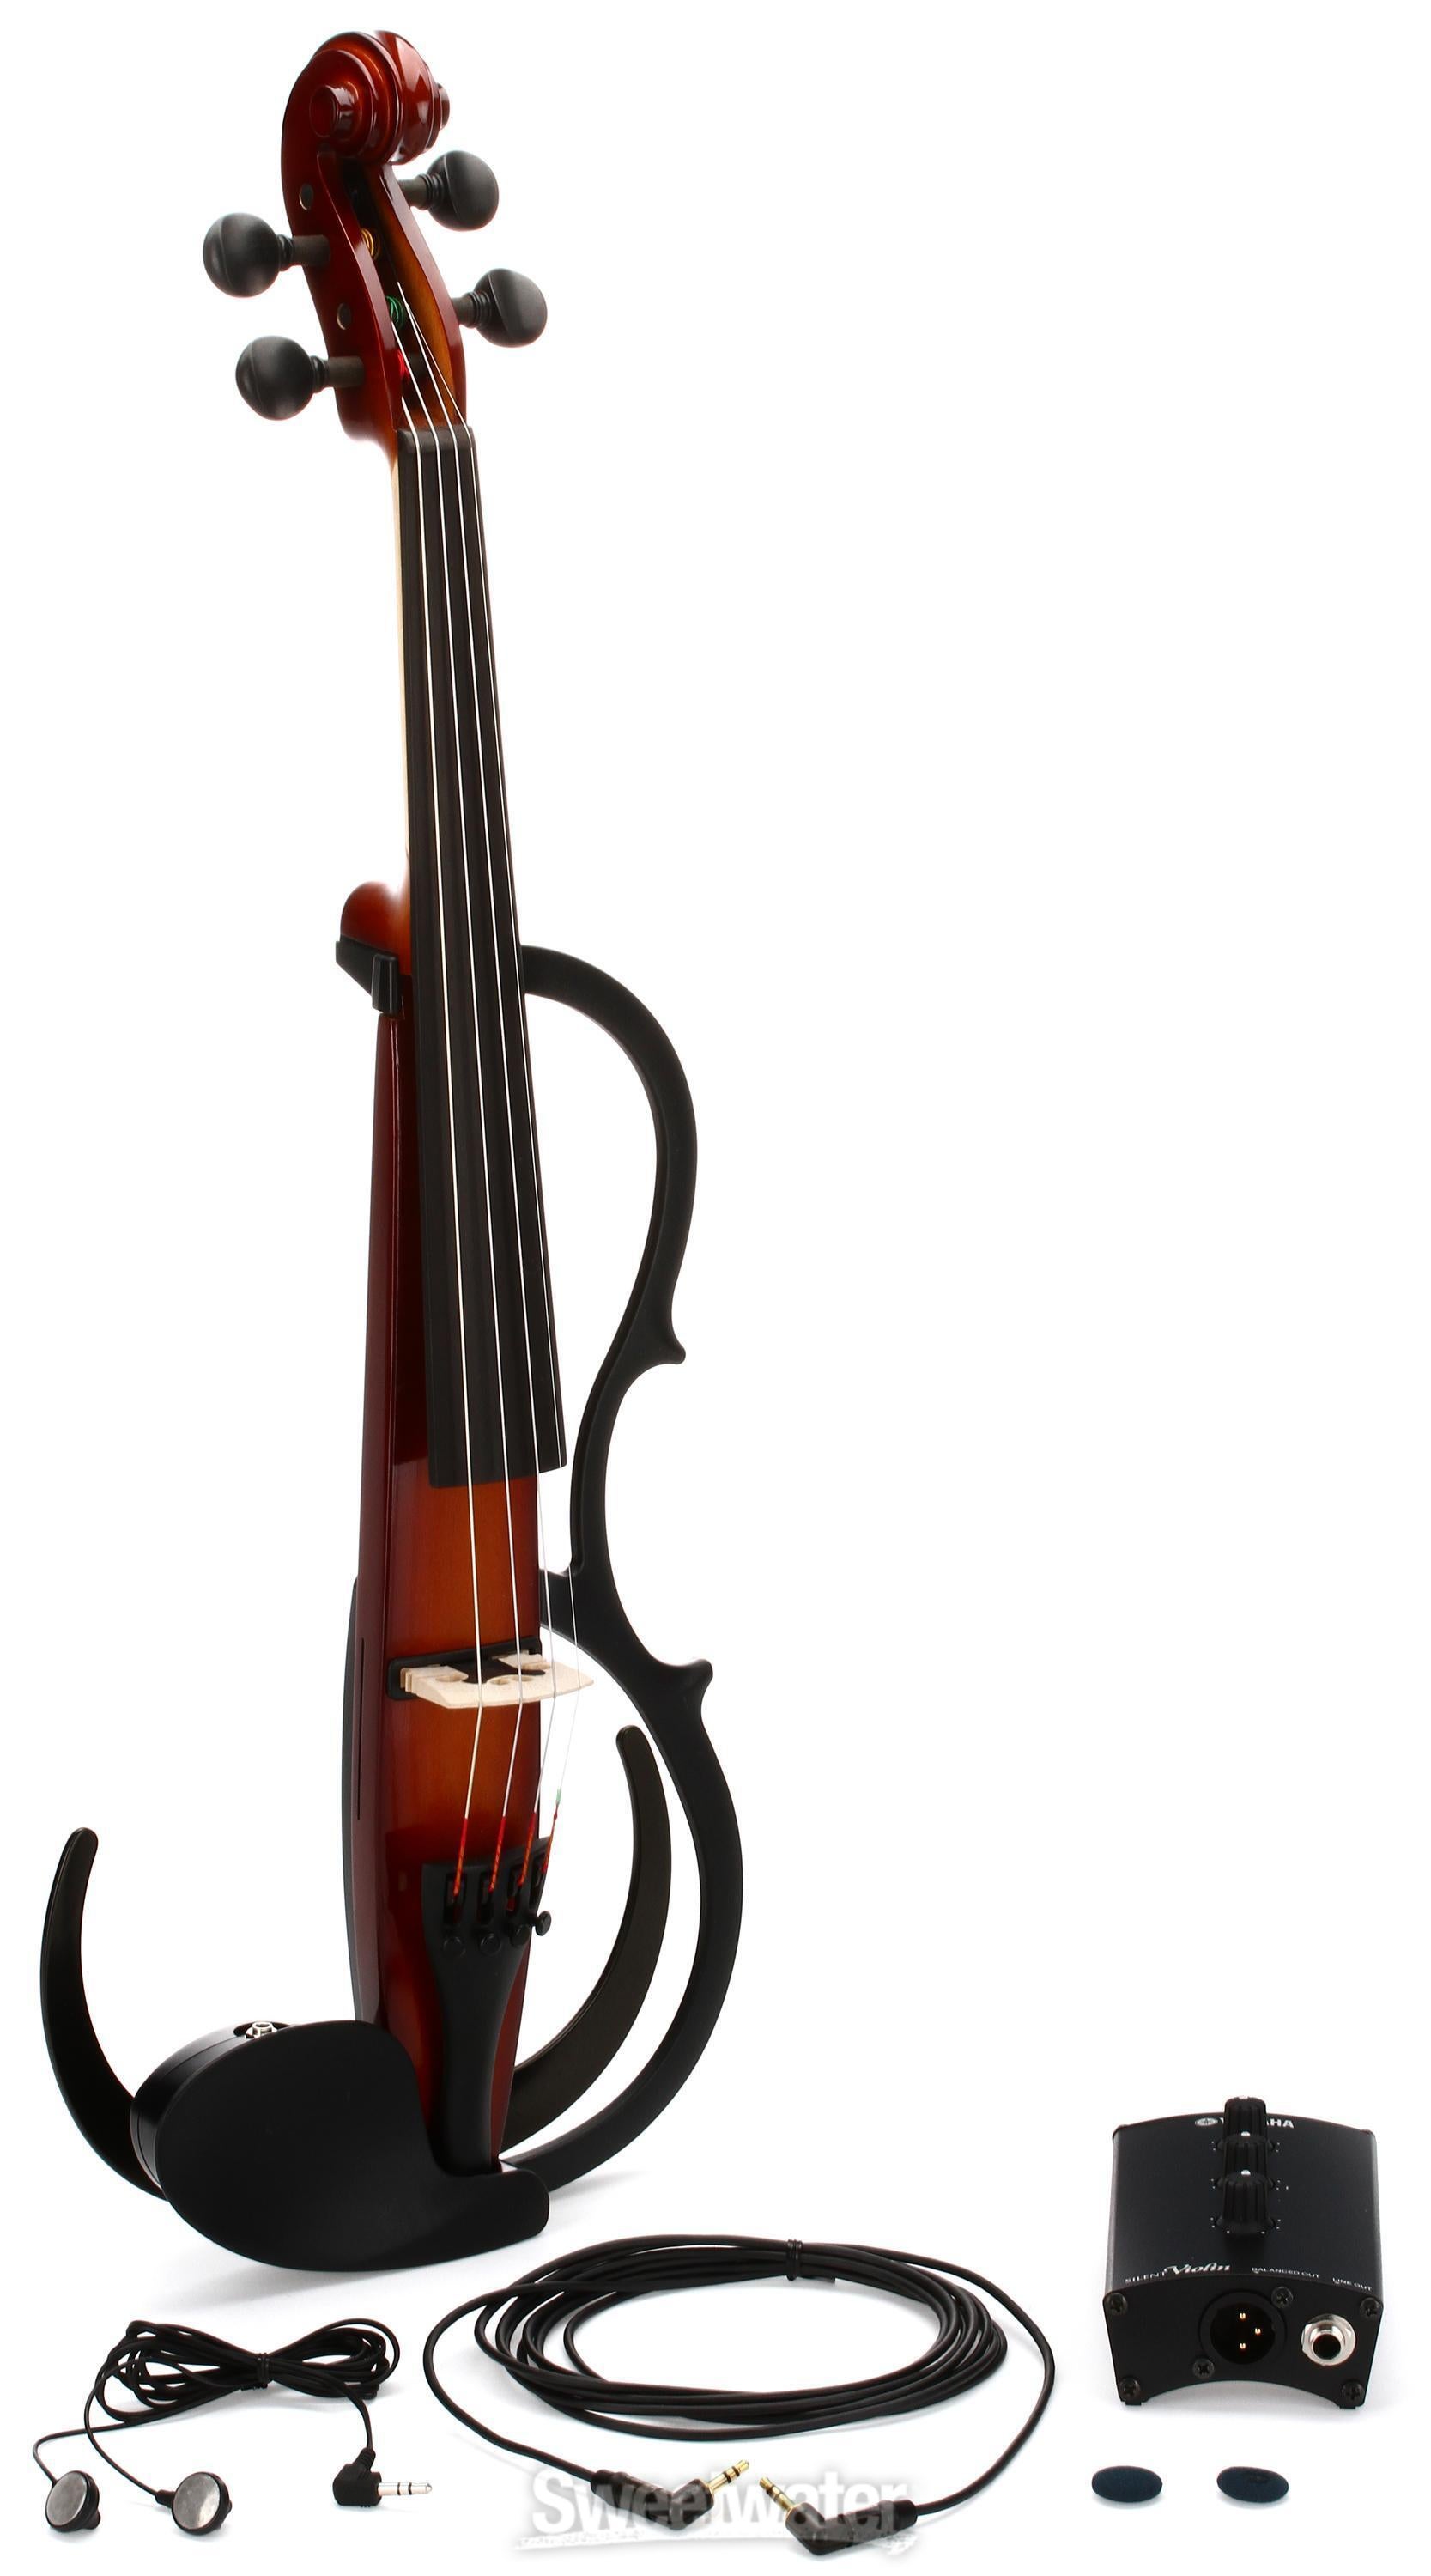 Yamaha Silent Series SV-250 Electric Violin - Shaded Brown